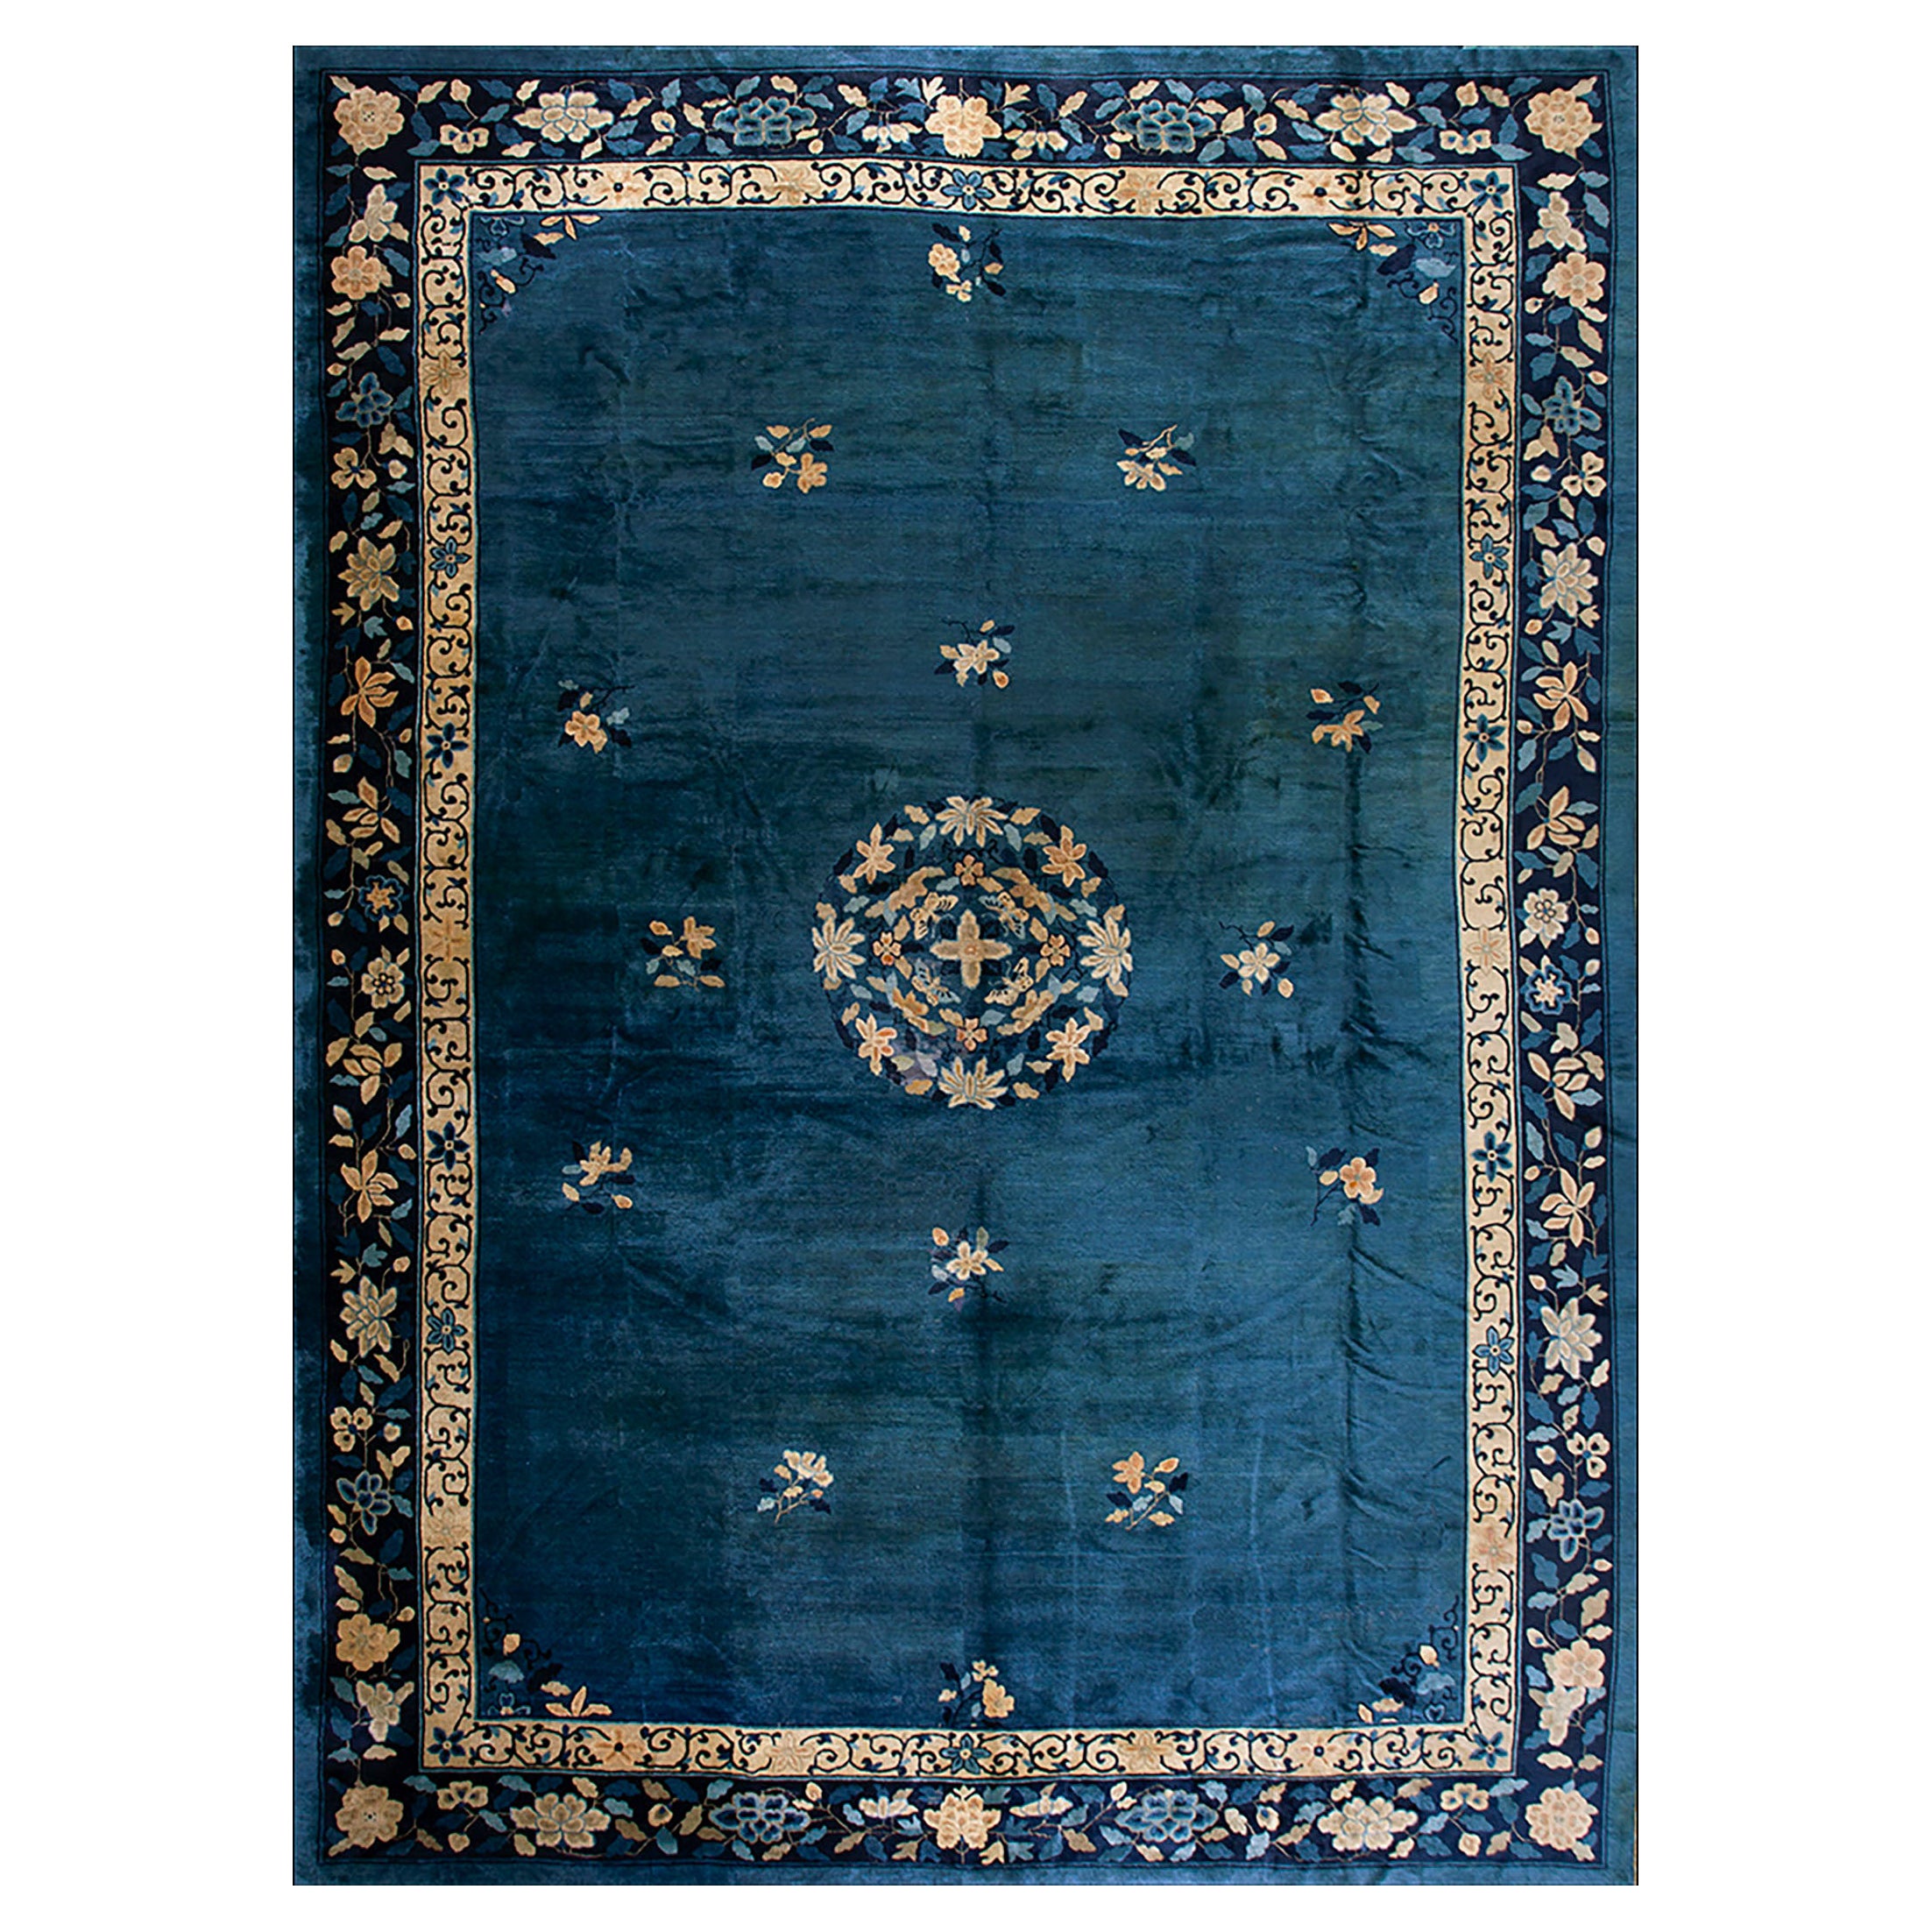 Late 19th Century Chinese Peking Carpet ( 13' x 17'10'' - 396 x 544 )